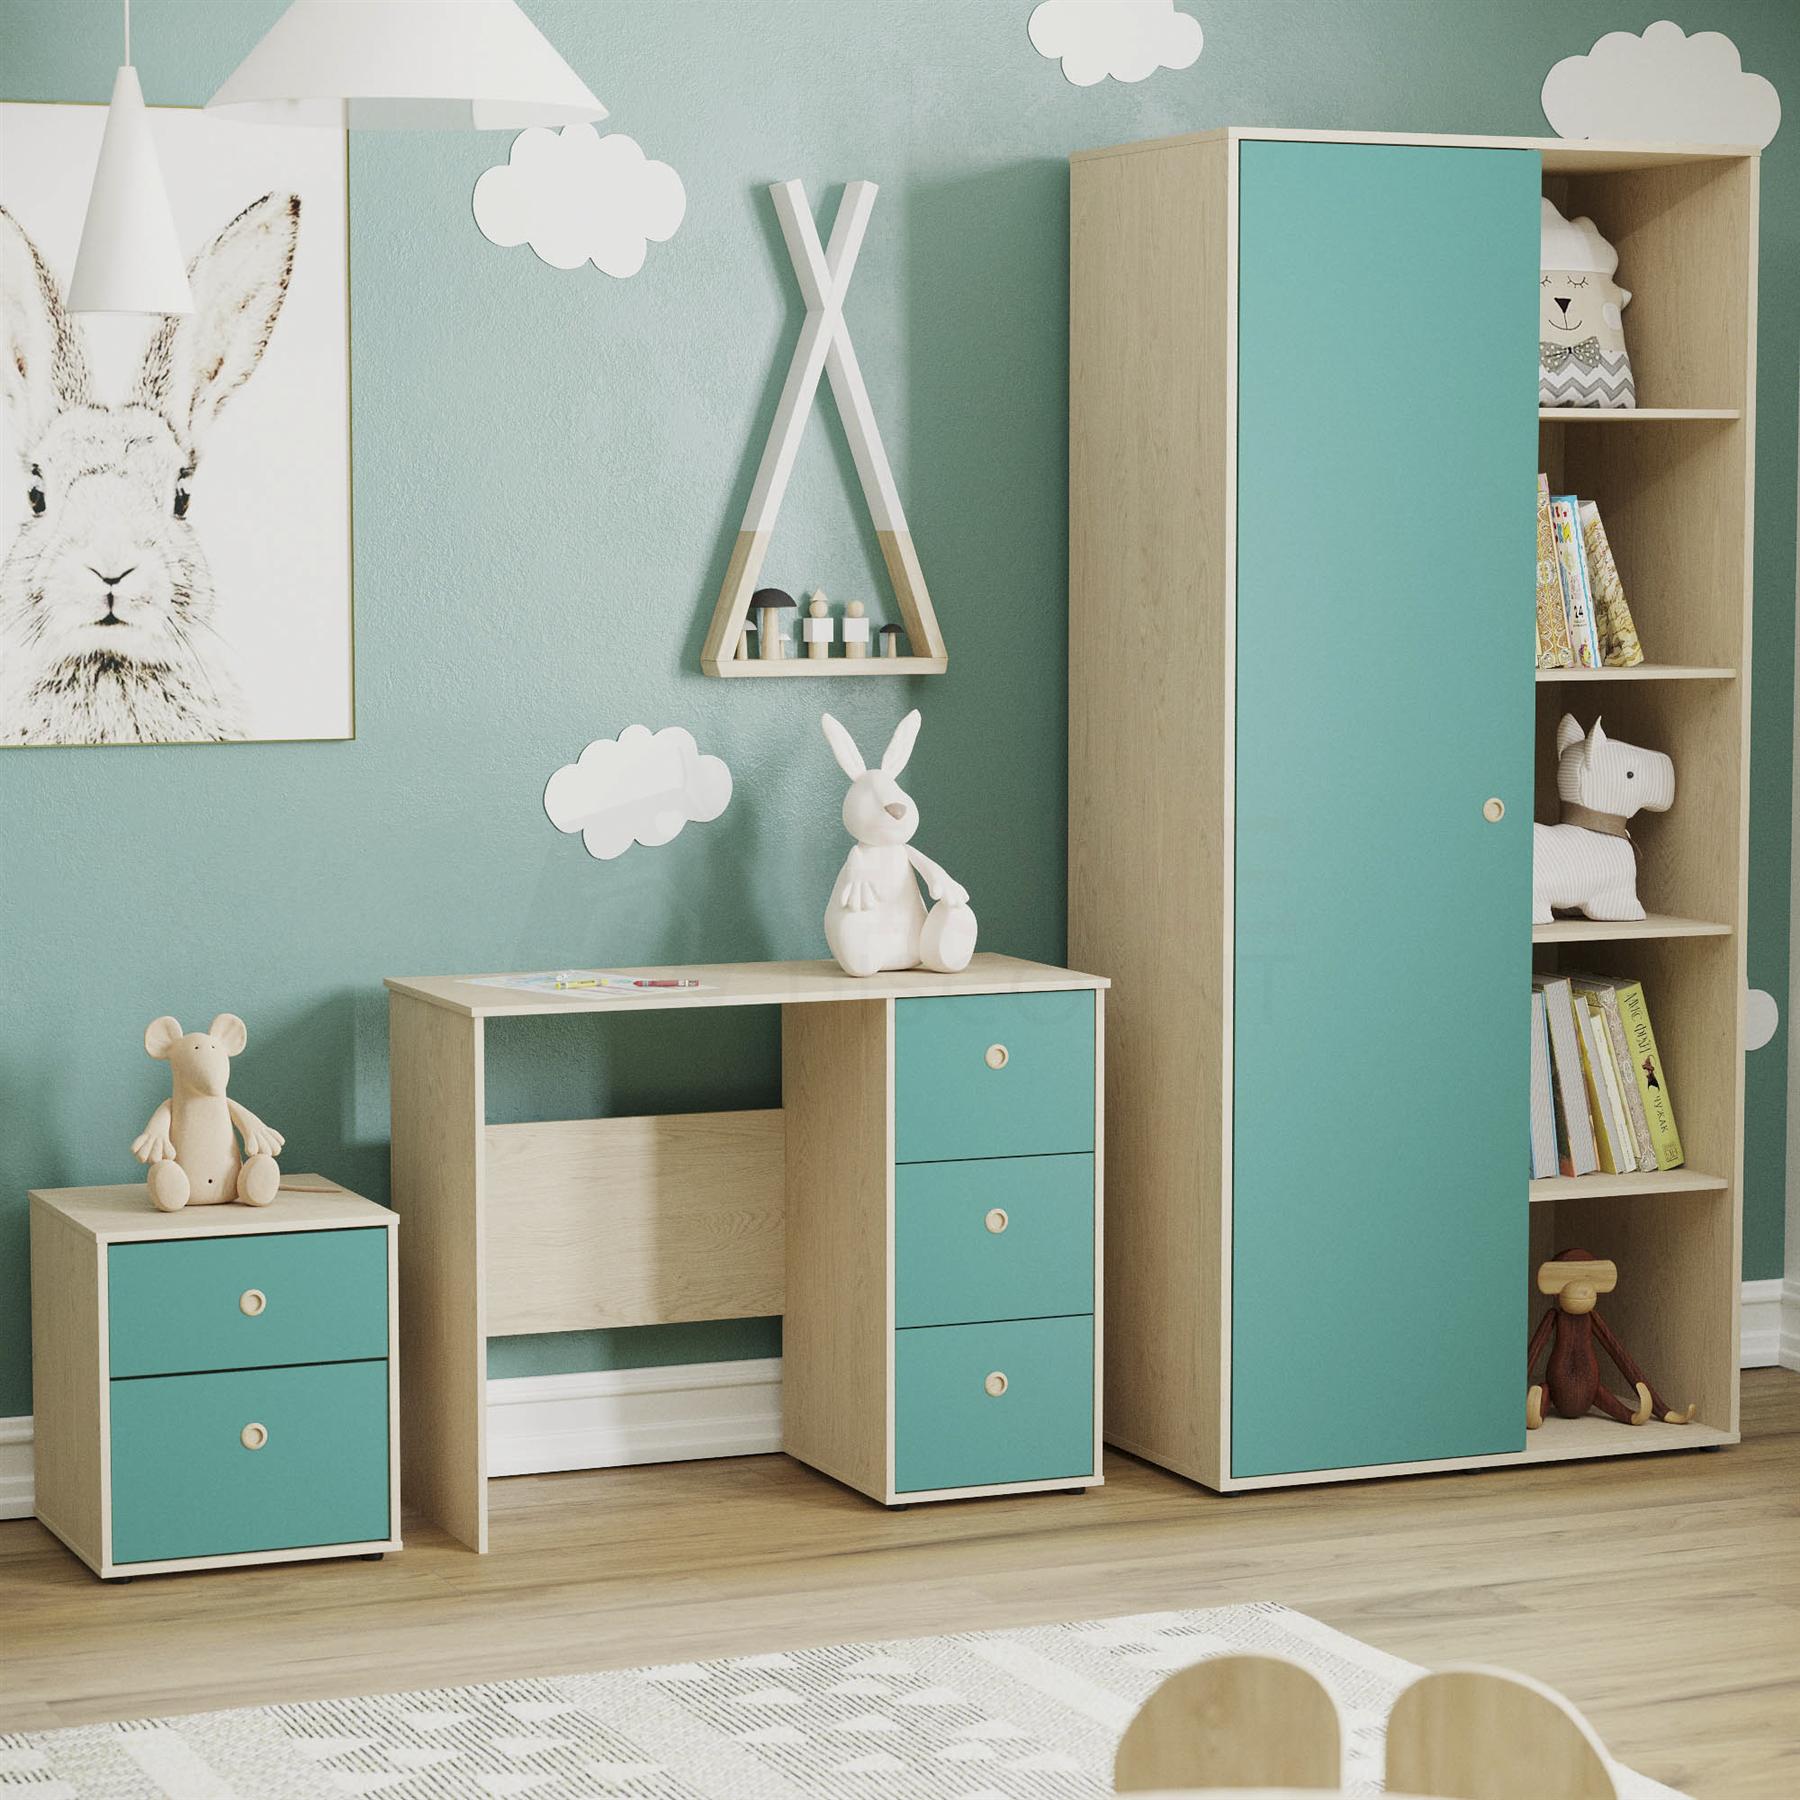 Junior Vida Neptune 3 Piece Bedroom Set Storage Furniture (Desk, Bedside Table, Wardrobe)